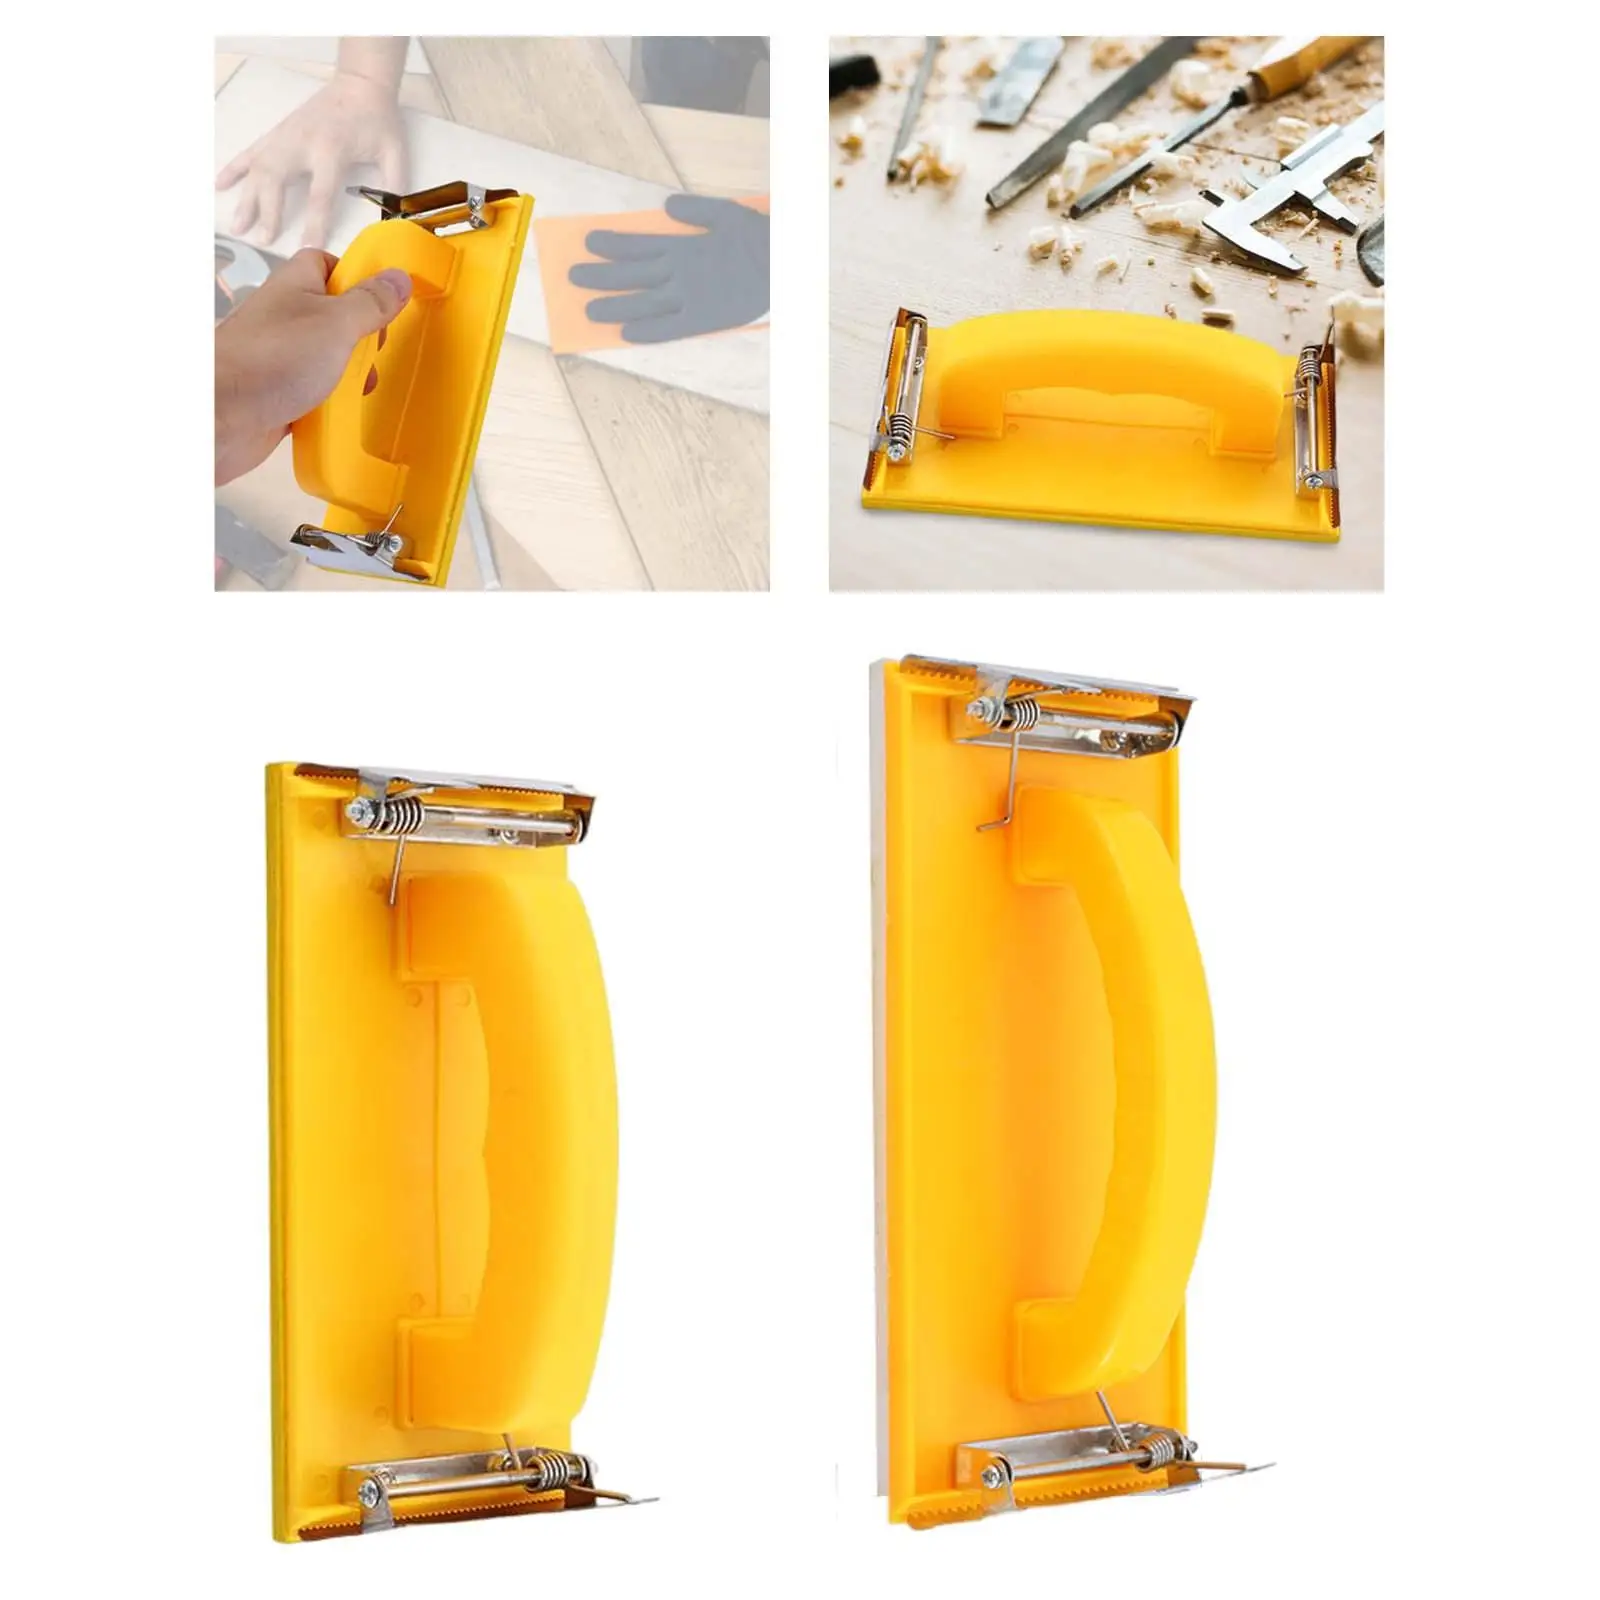 Portable Hand Sander Organizer Hand Tool Metal Clip Sandpaper Holder for Drywall Wood Furniture Finishing Metal